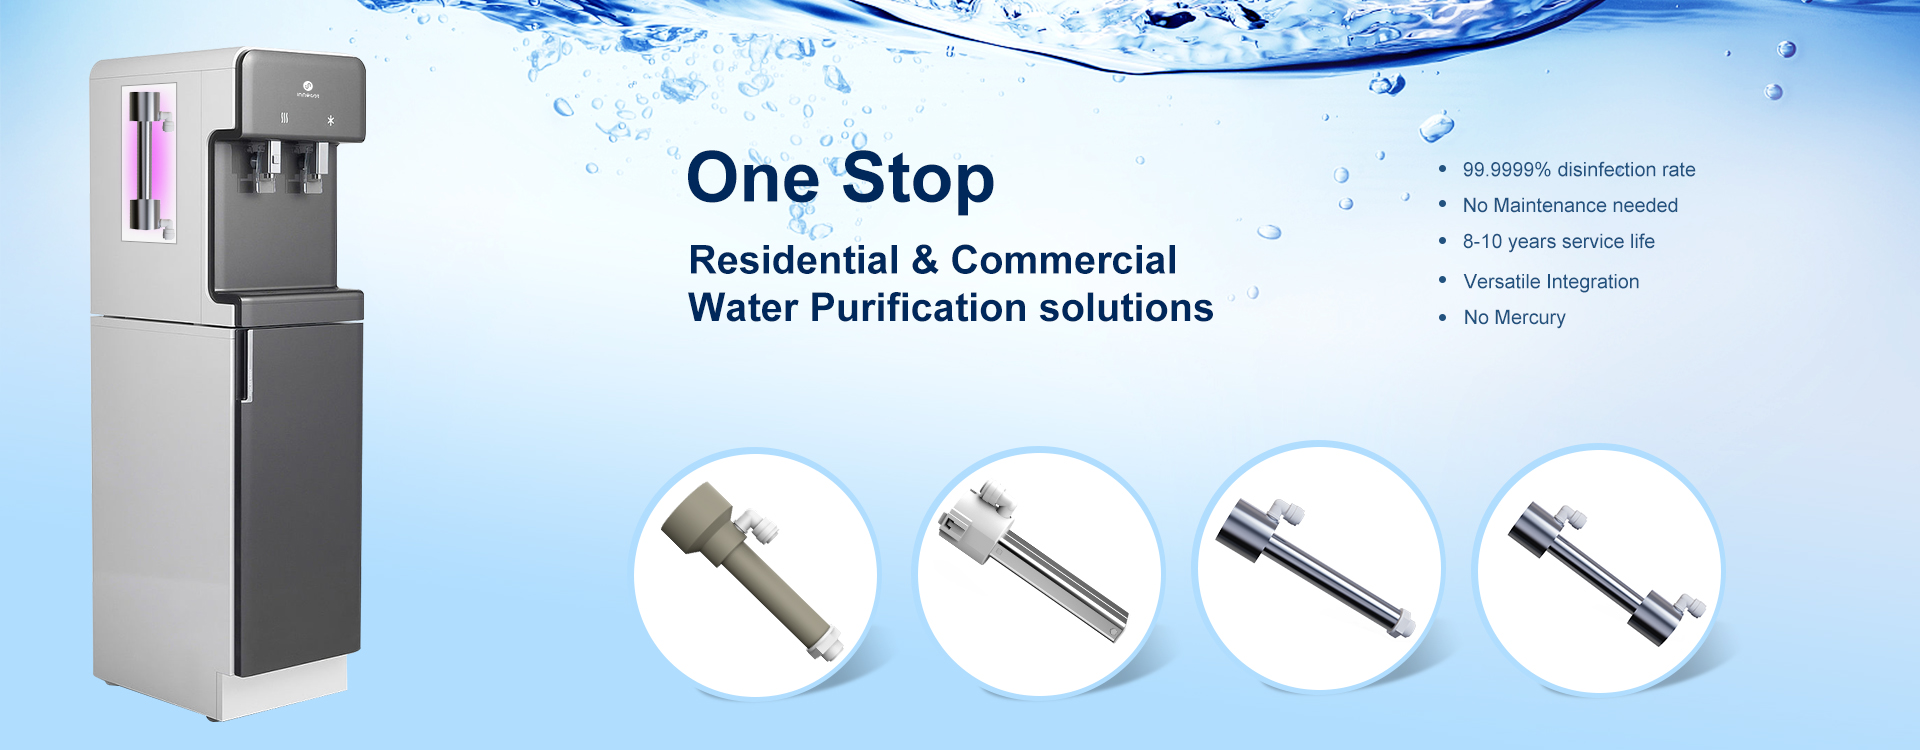 Popularization of UV water sterilization technology